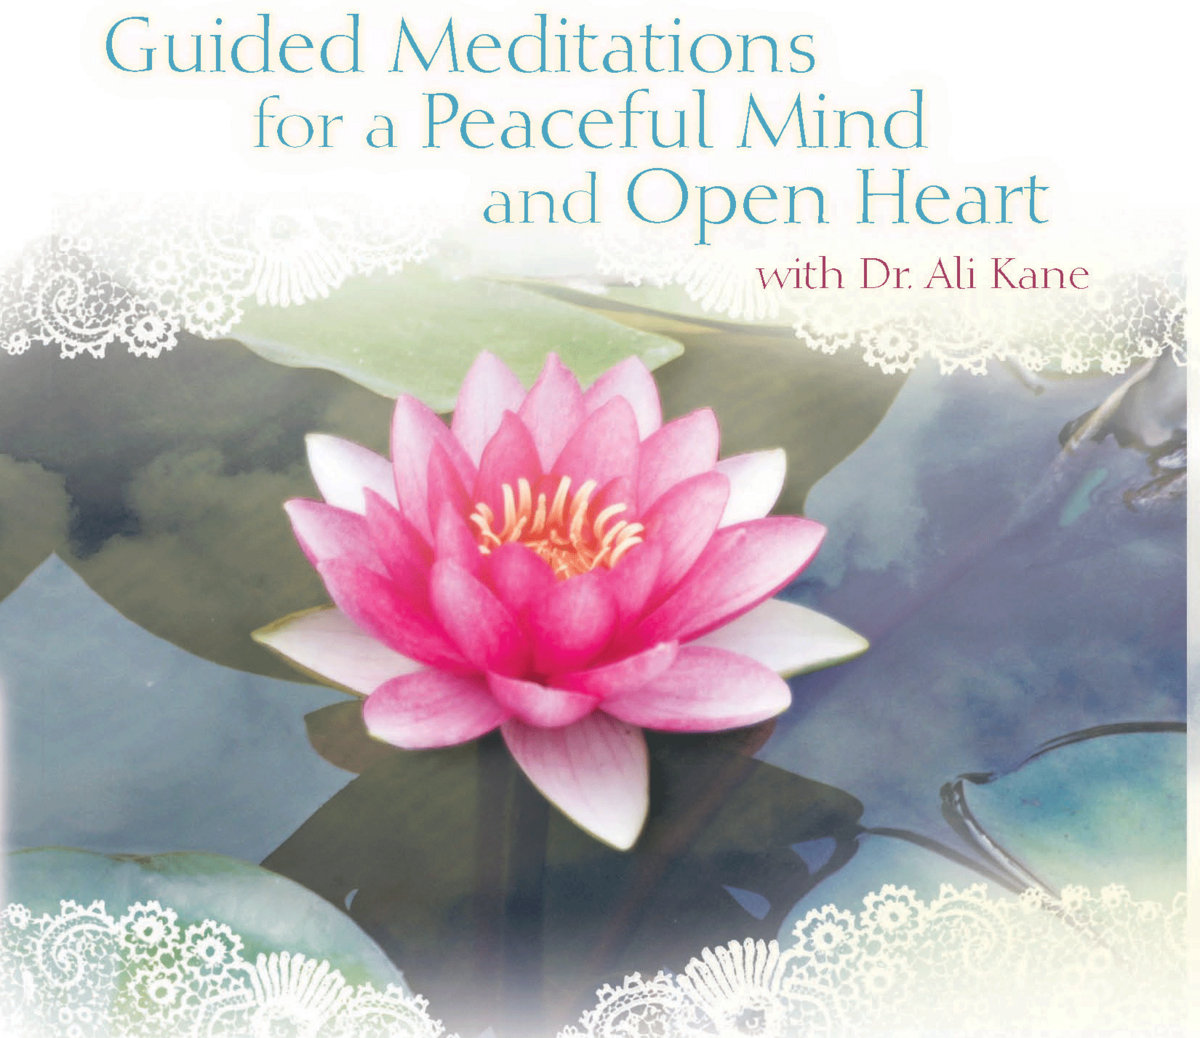 open heart guided meditation script